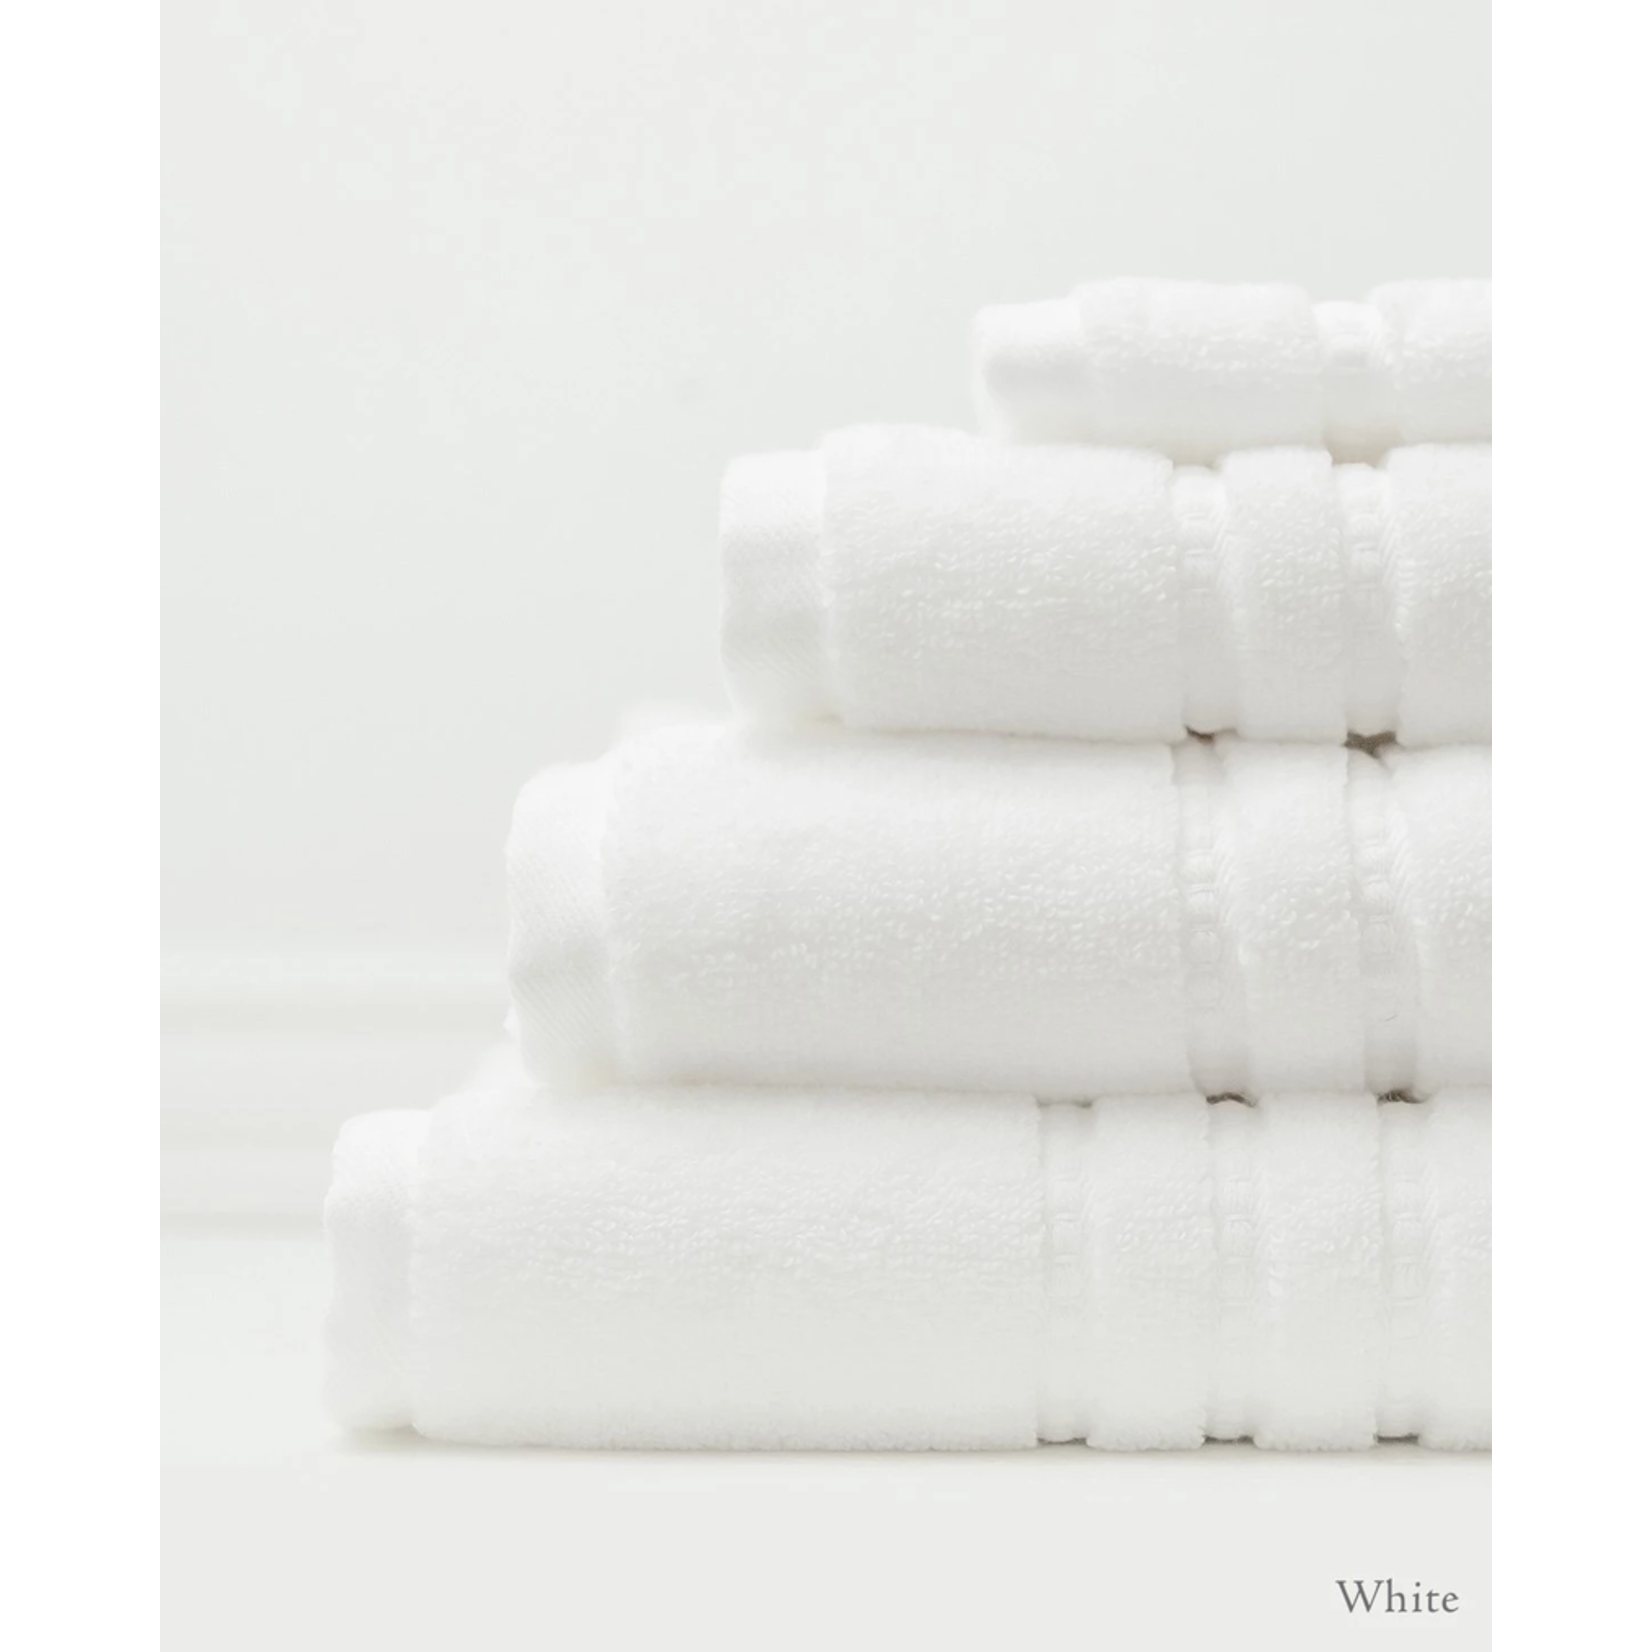 Cuddle Down Portofino White Towel Set - 1 Bath, 1 Hand, 1 Wash